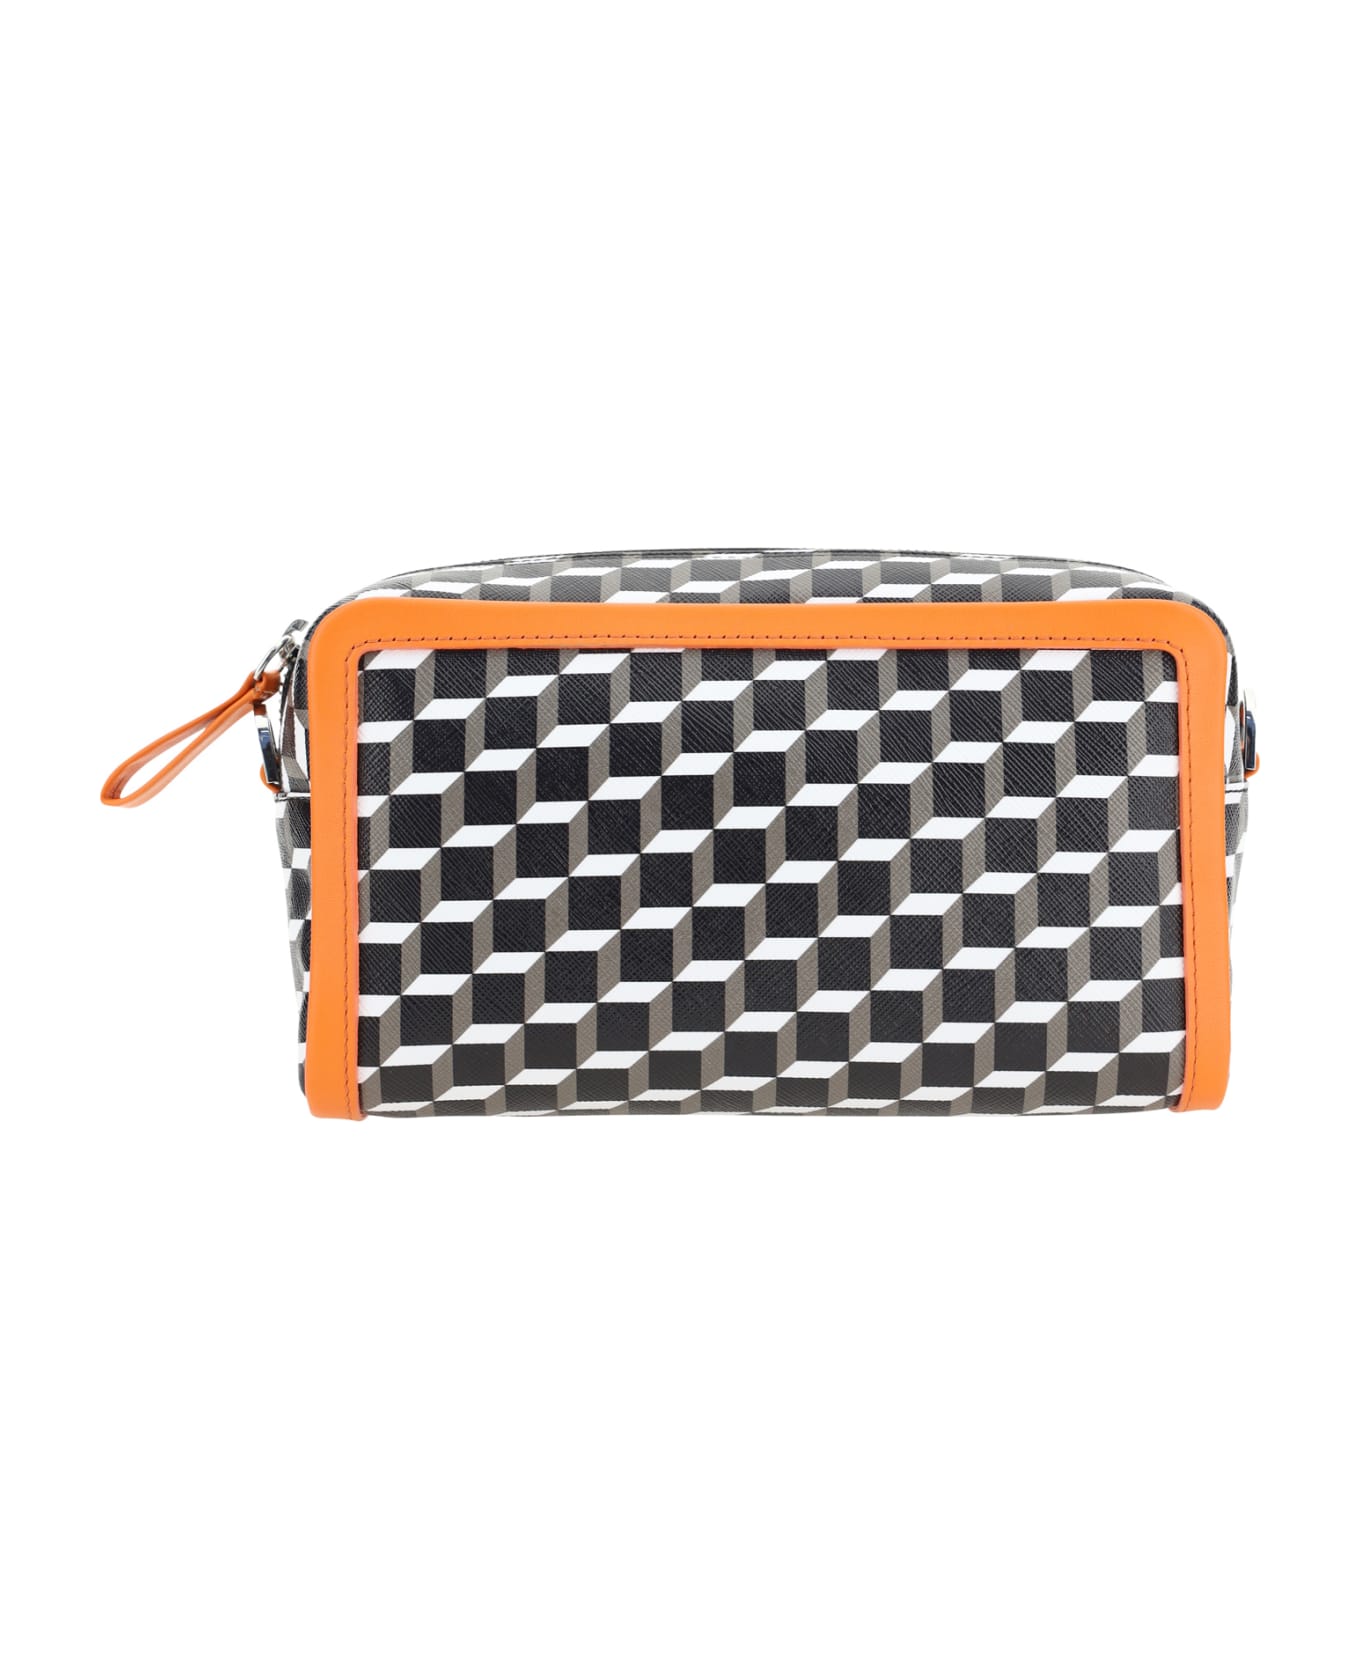 Pierre Hardy Cube Box Shoulder Bag - Black/white/orange